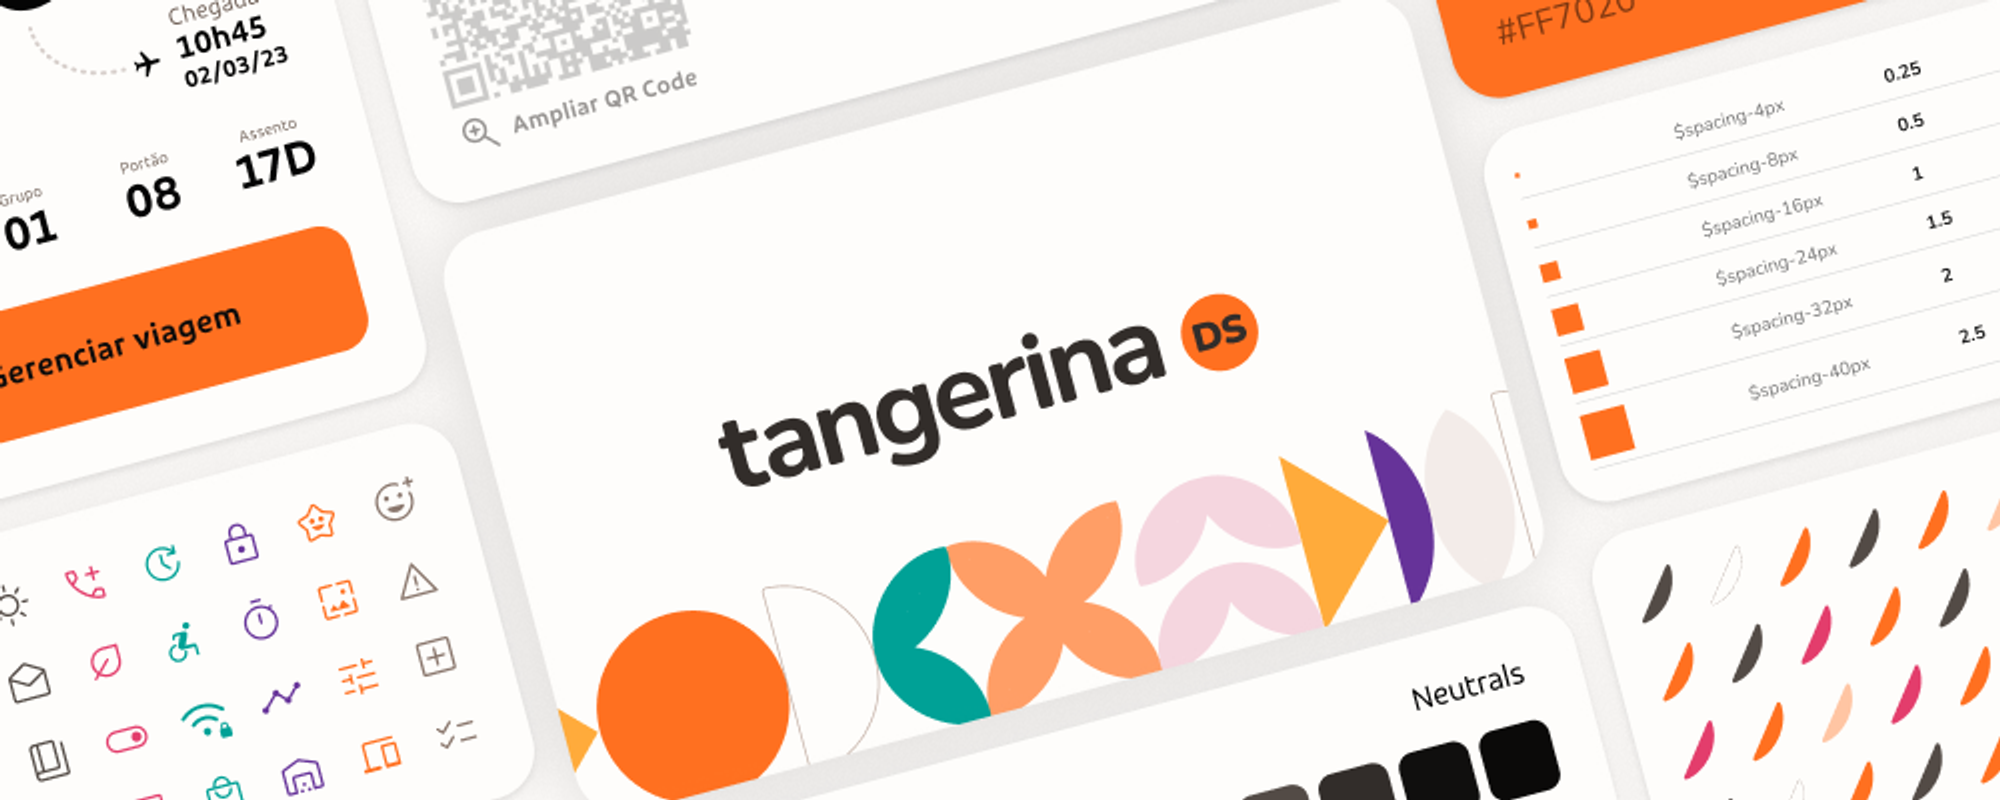 Tangerina